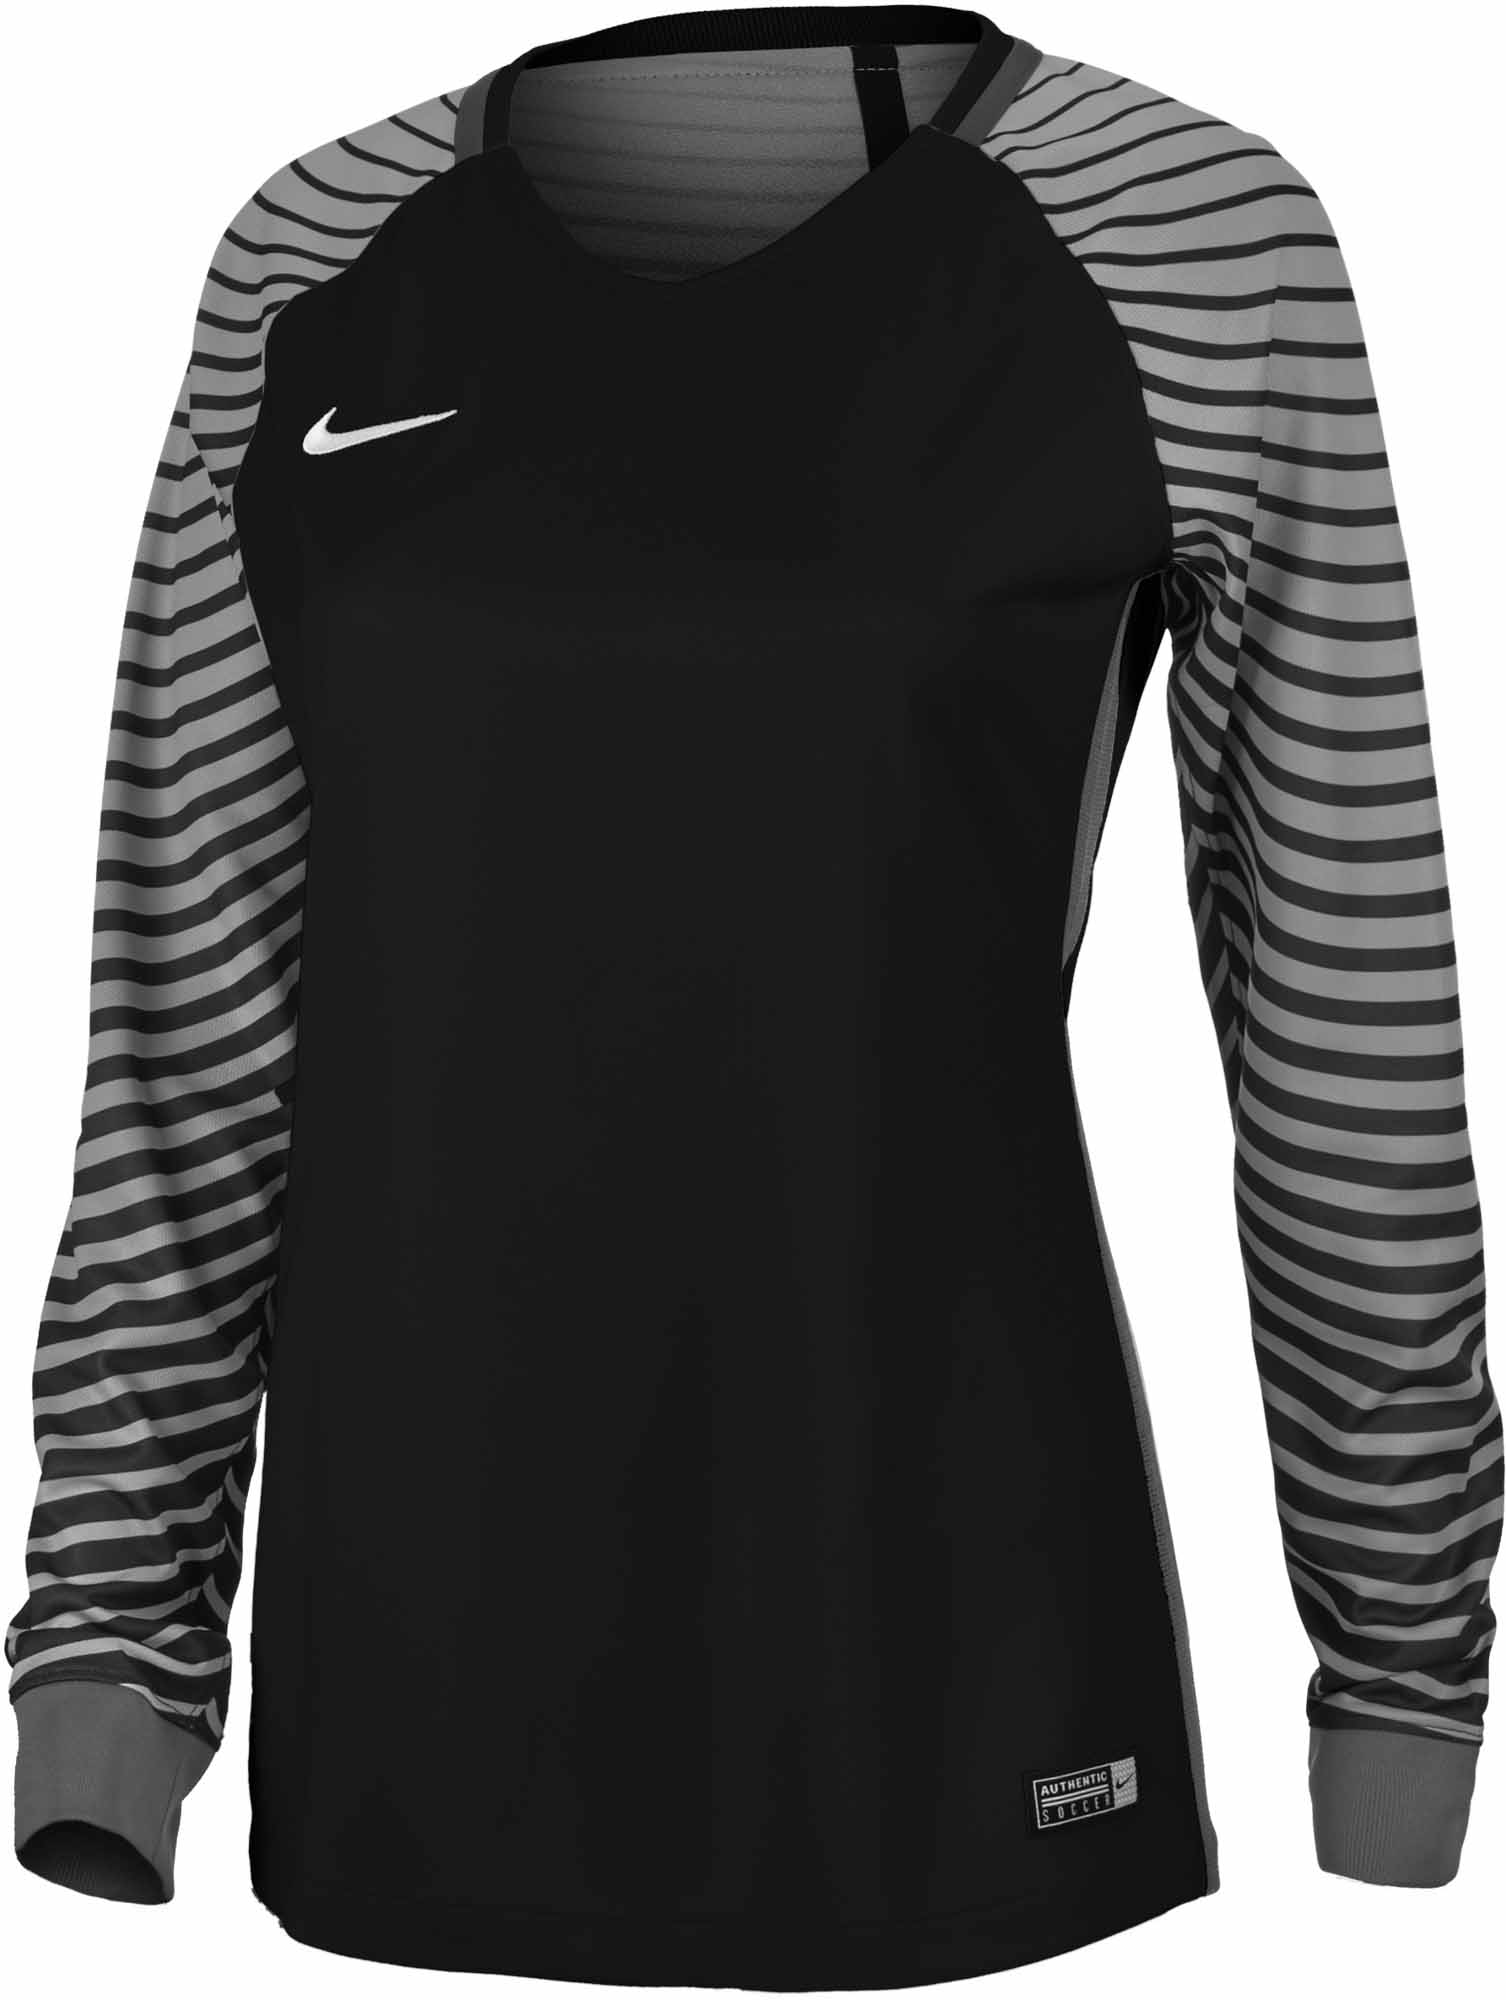 Nike Gardien III Team Goalkeeper Jersey - Dark Grey & Iron Grey with Black  - SoccerPro